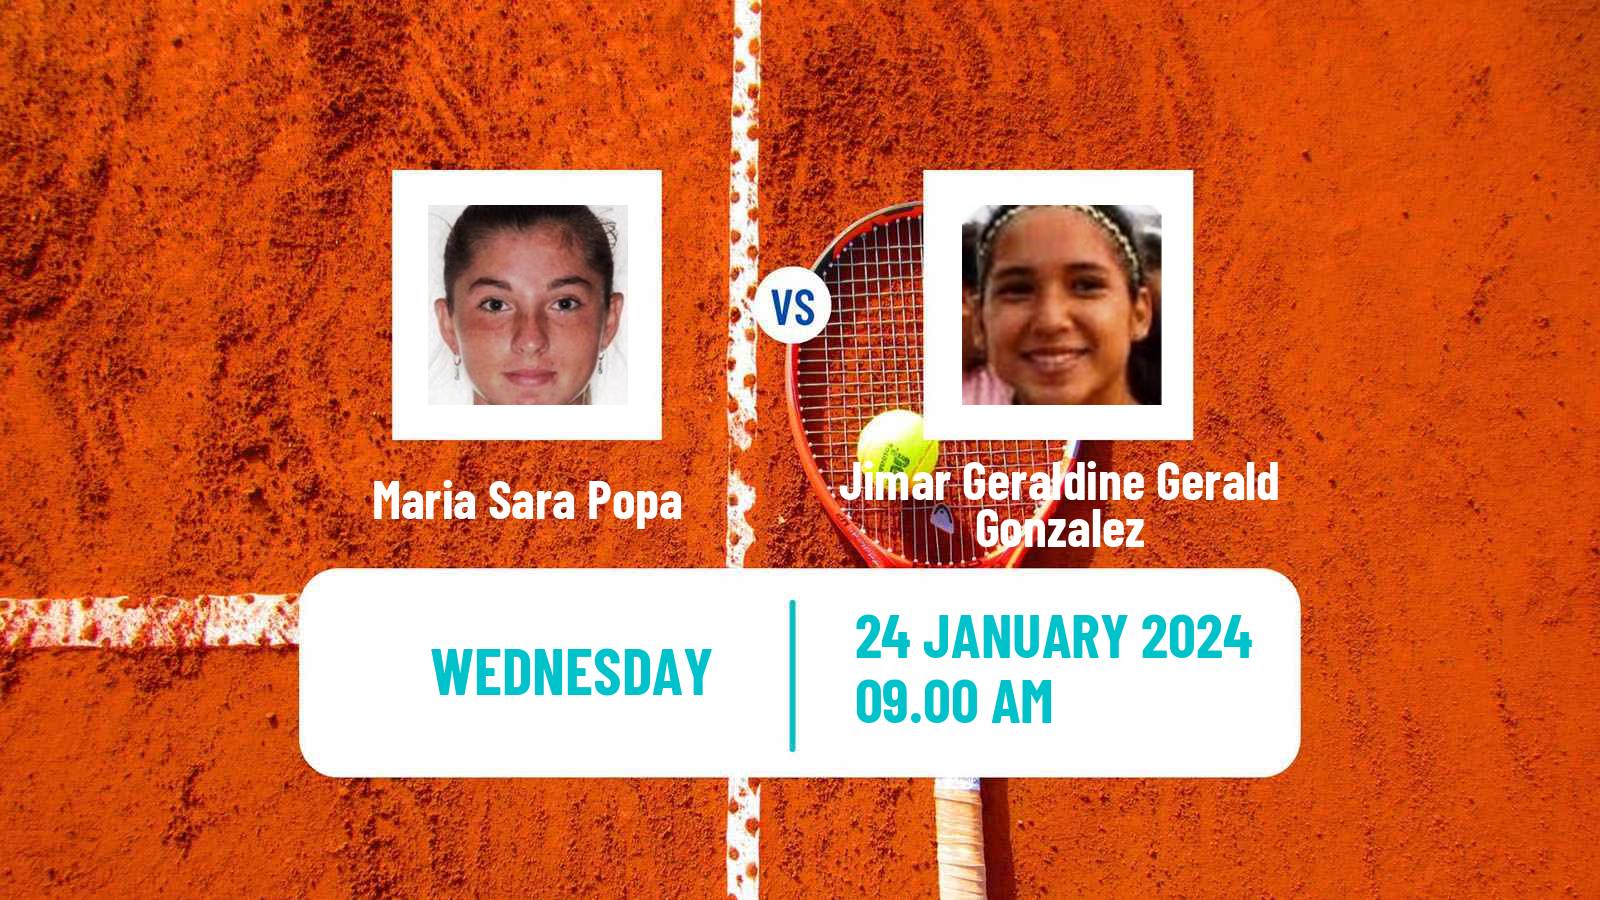 Tennis ITF W35 Buenos Aires 2 Women Maria Sara Popa - Jimar Geraldine Gerald Gonzalez